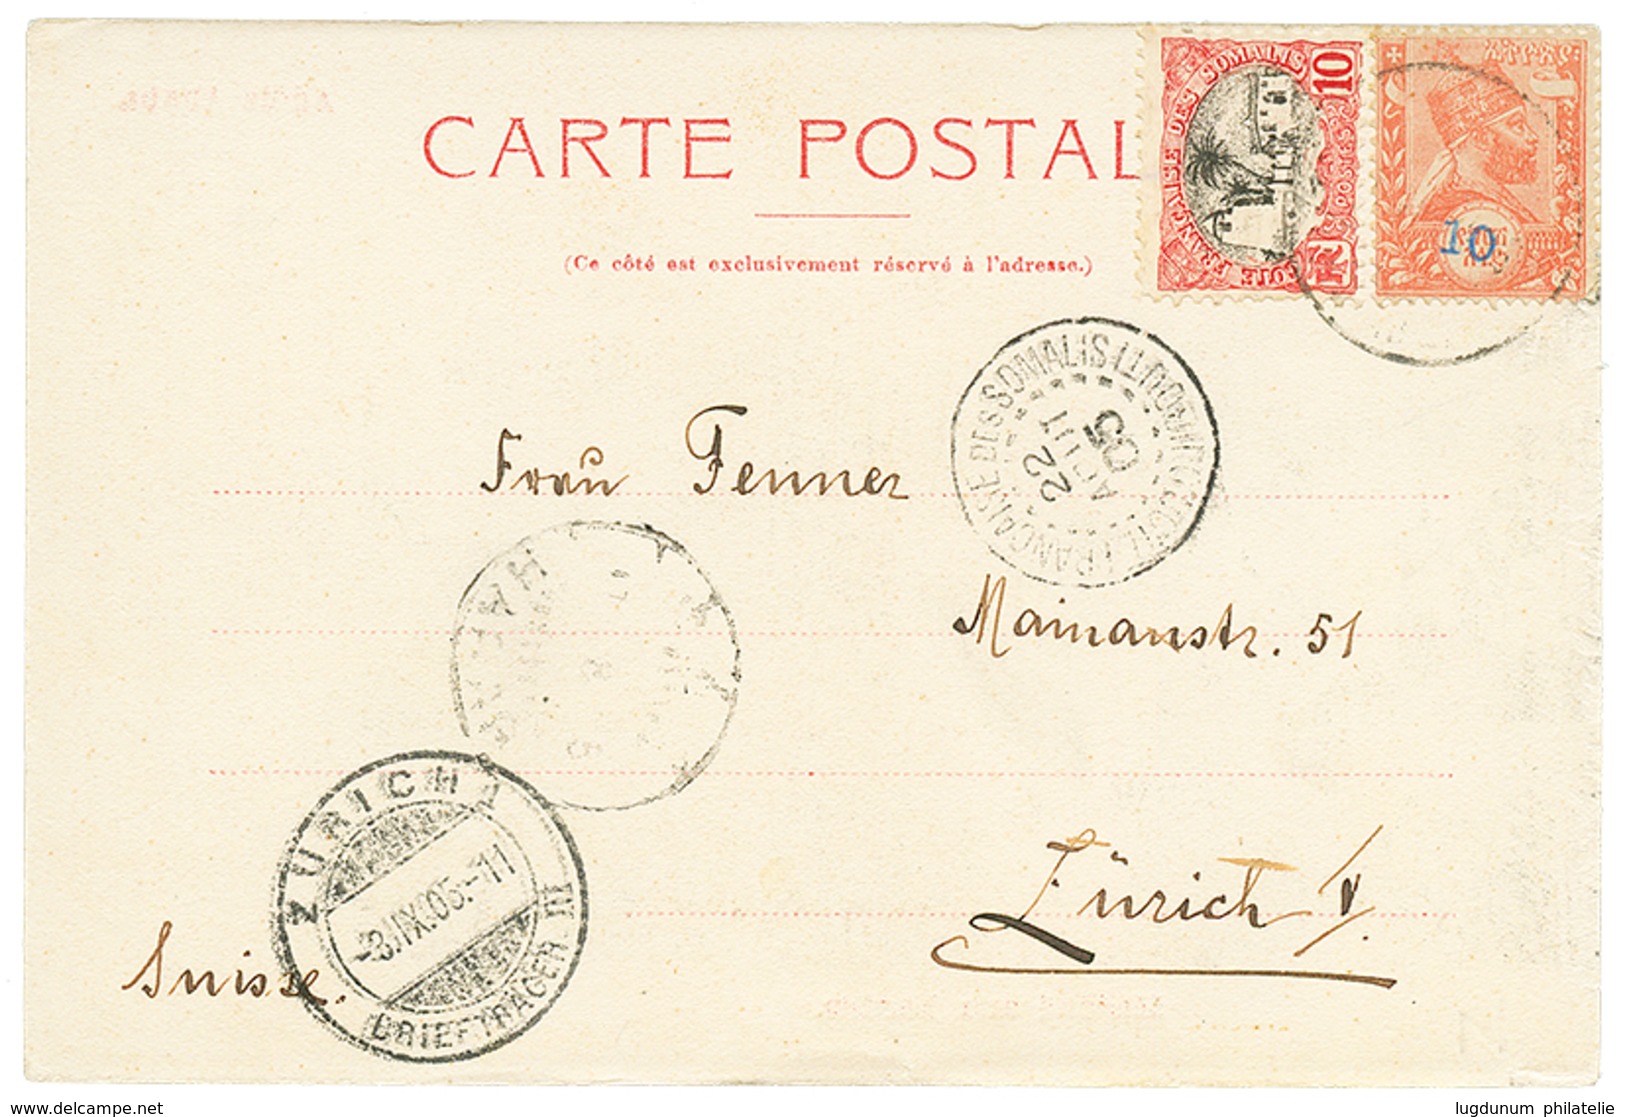 1905 ETHIOPIA 10 On 1/2g + SOMALI COAST 10c Canc. HARRAR On Card Via DJIBOUTI To SWITZERLAND. Vf. - Äthiopien